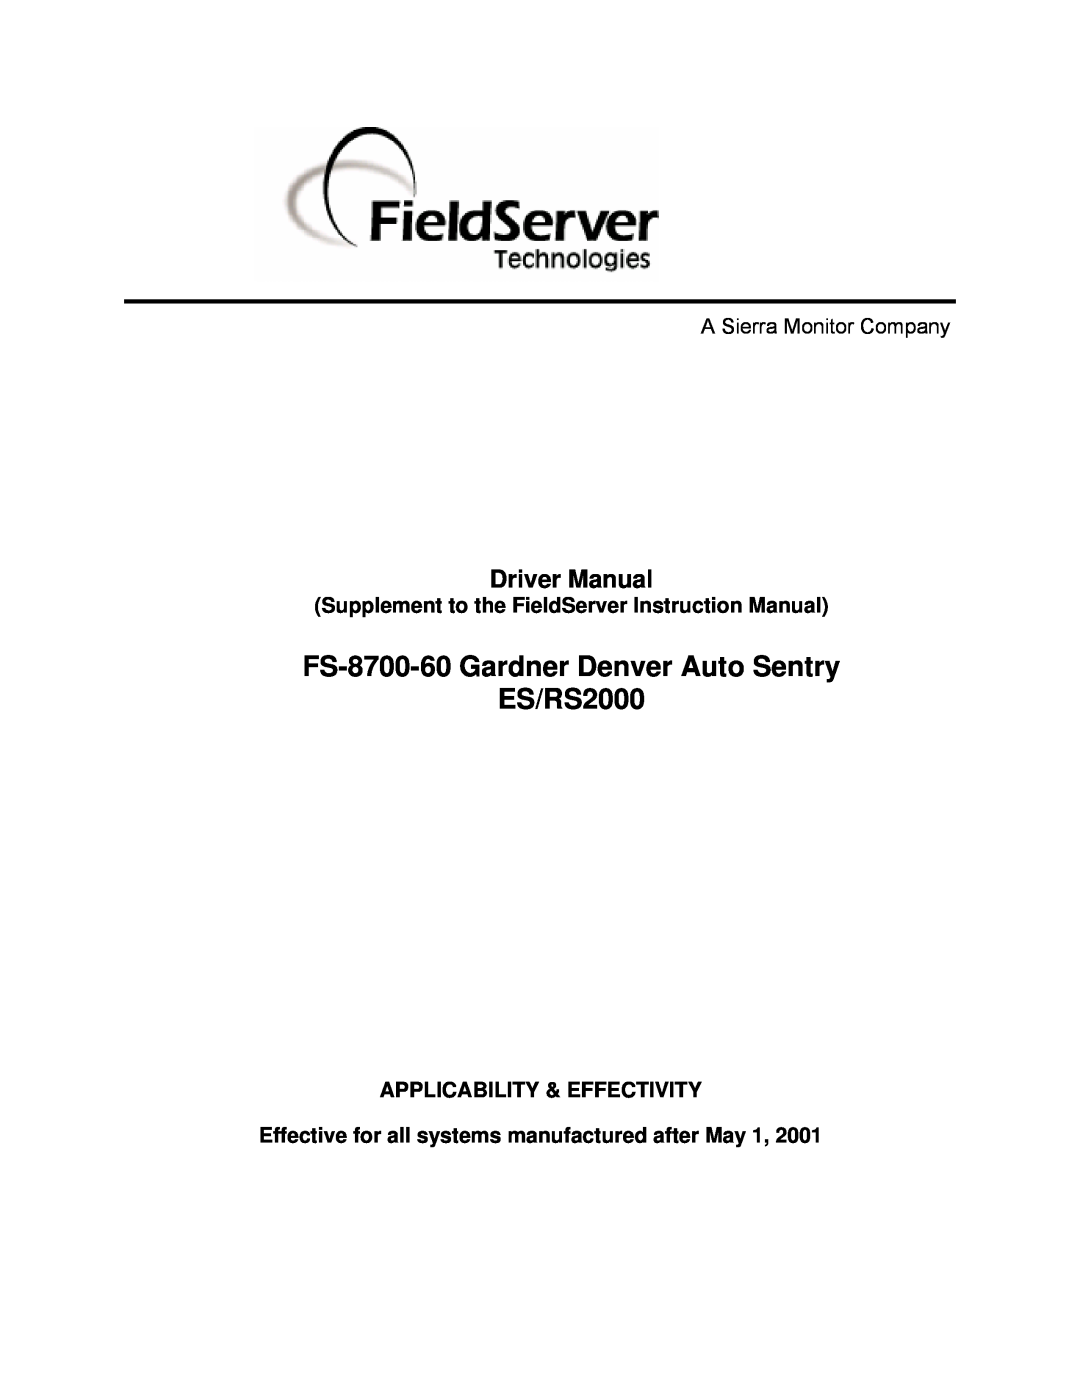 FieldServer instruction manual FS-8700-60 Gardner Denver Auto Sentry ES/RS2000, Applicability & Effectivity 